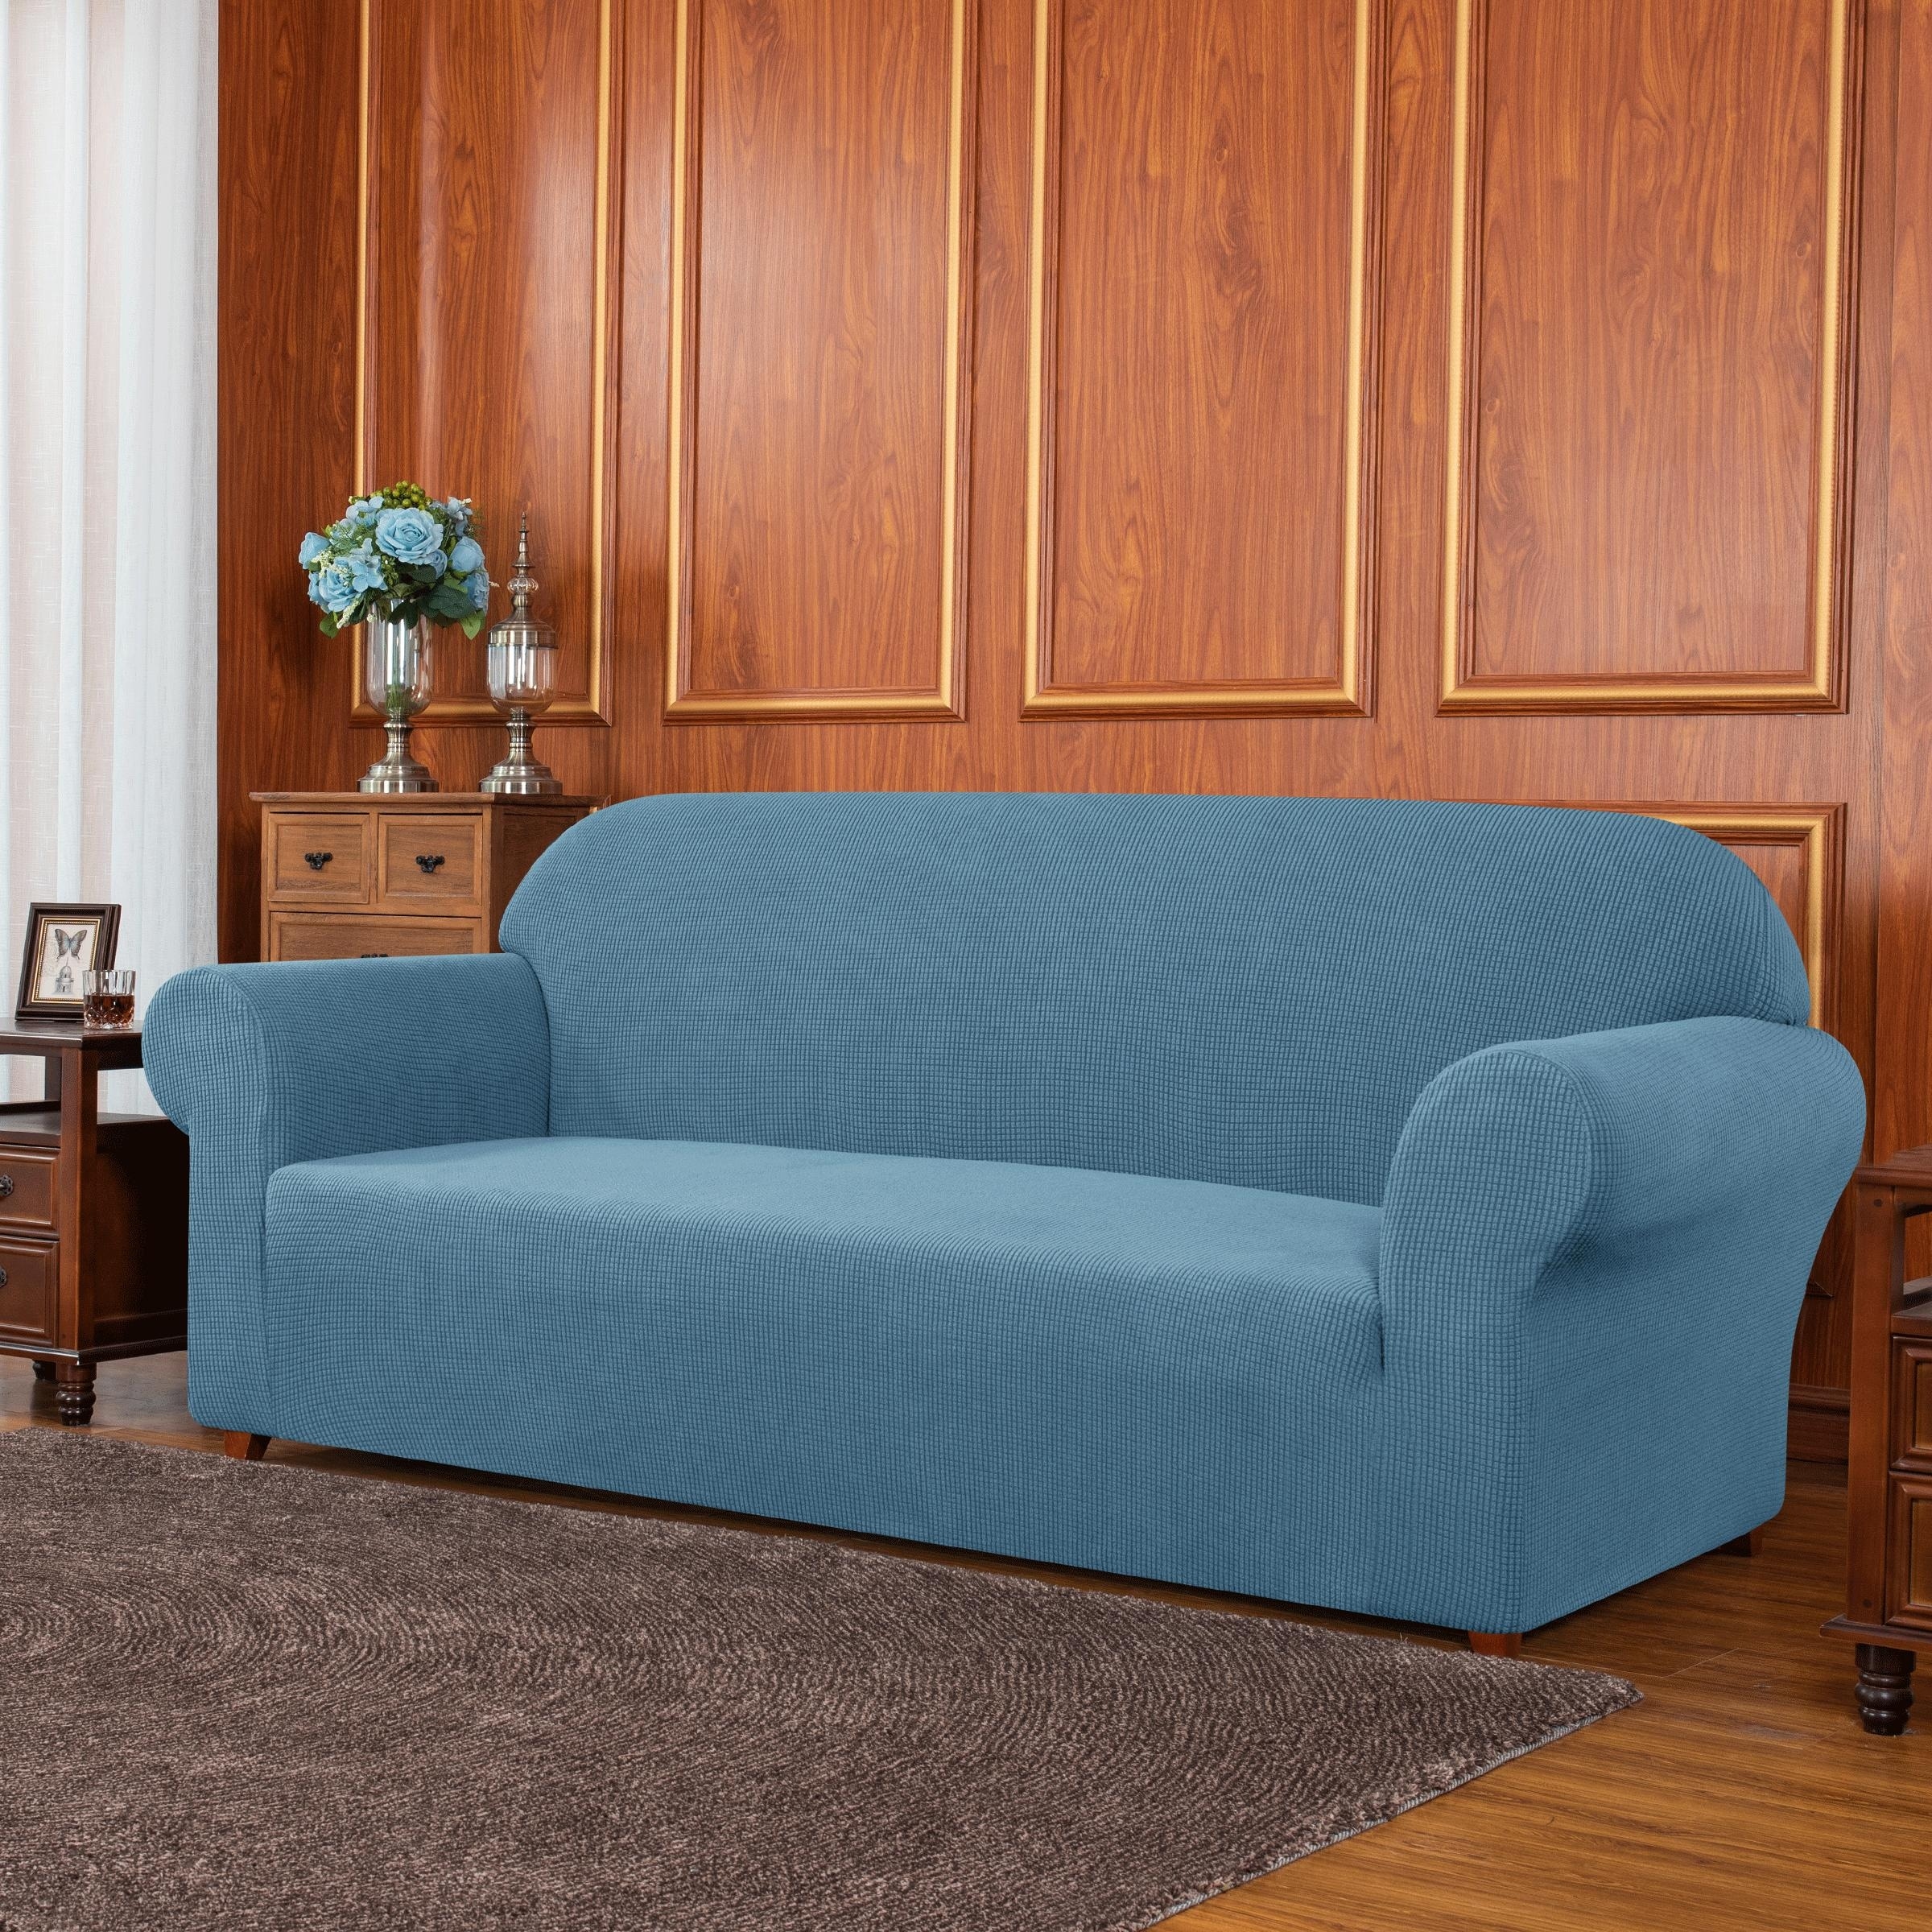 Subrtex 1-Piece Spandex Stretch Sofa Slipcover Chair, Blue